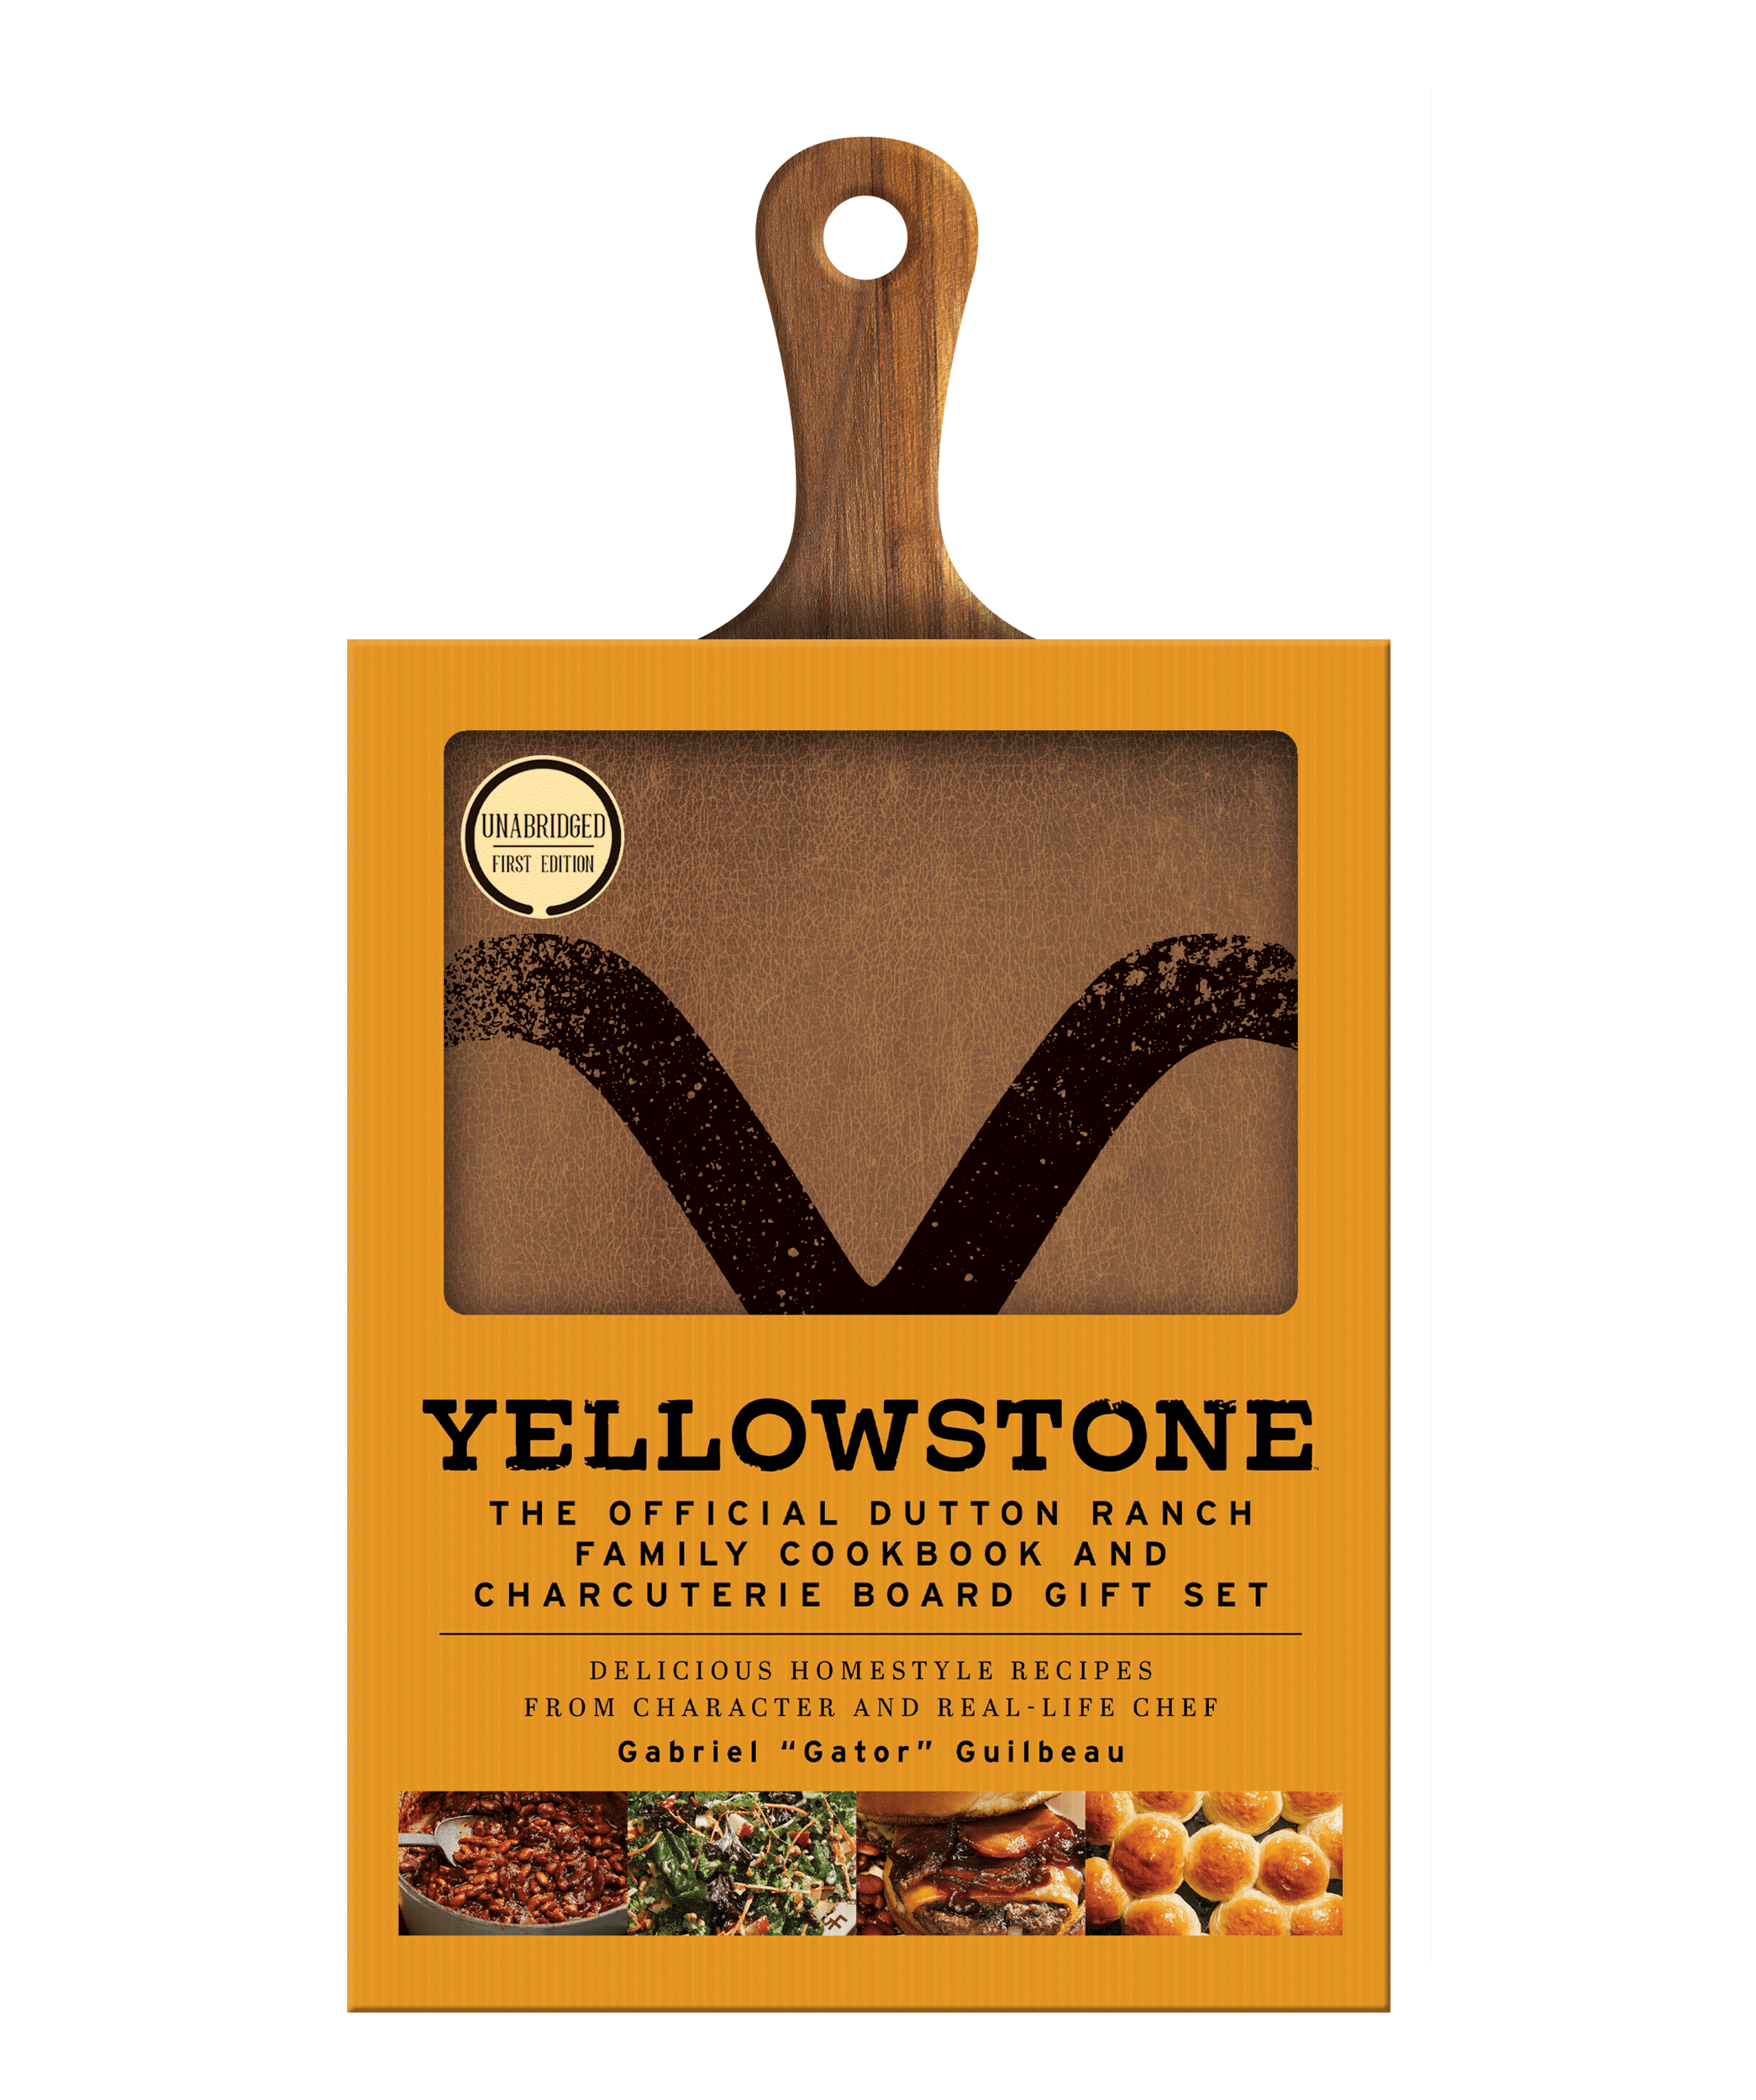 Yellowstone' Cookbook: Where to Buy – Billboard